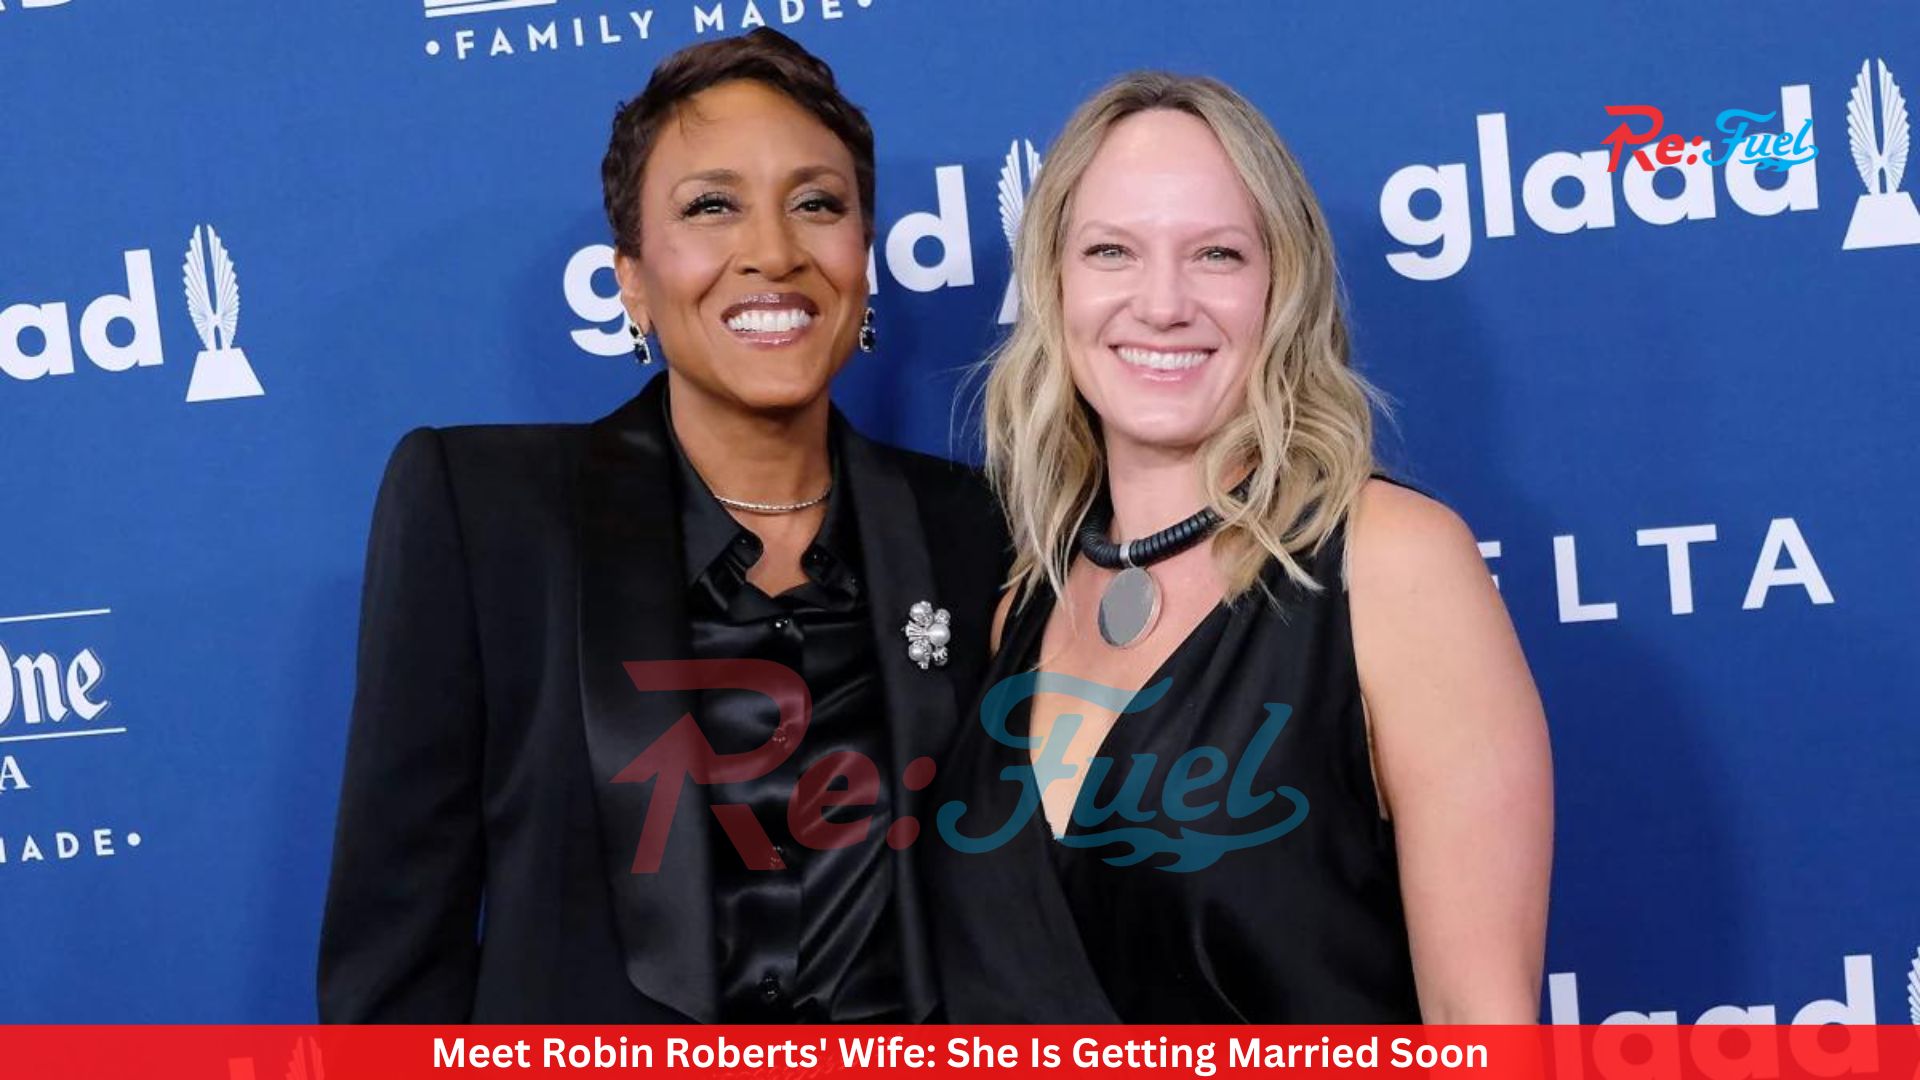 Meet Robin Roberts' Wife: She Is Getting Married Soon